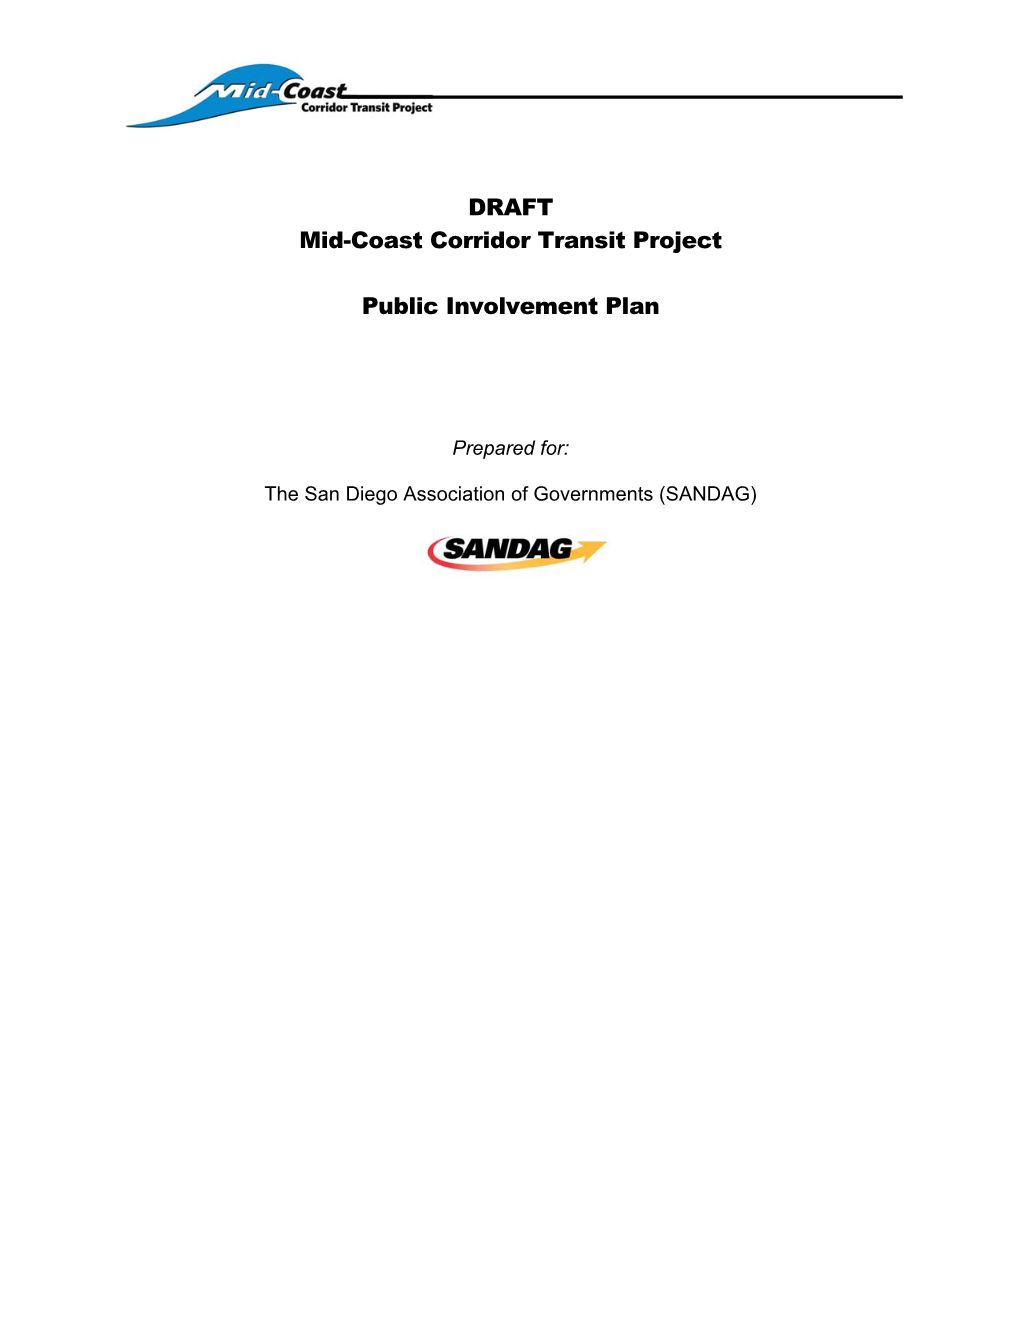 DRAFT Mid-Coast Corridor Transit Project Public Involvement Plan